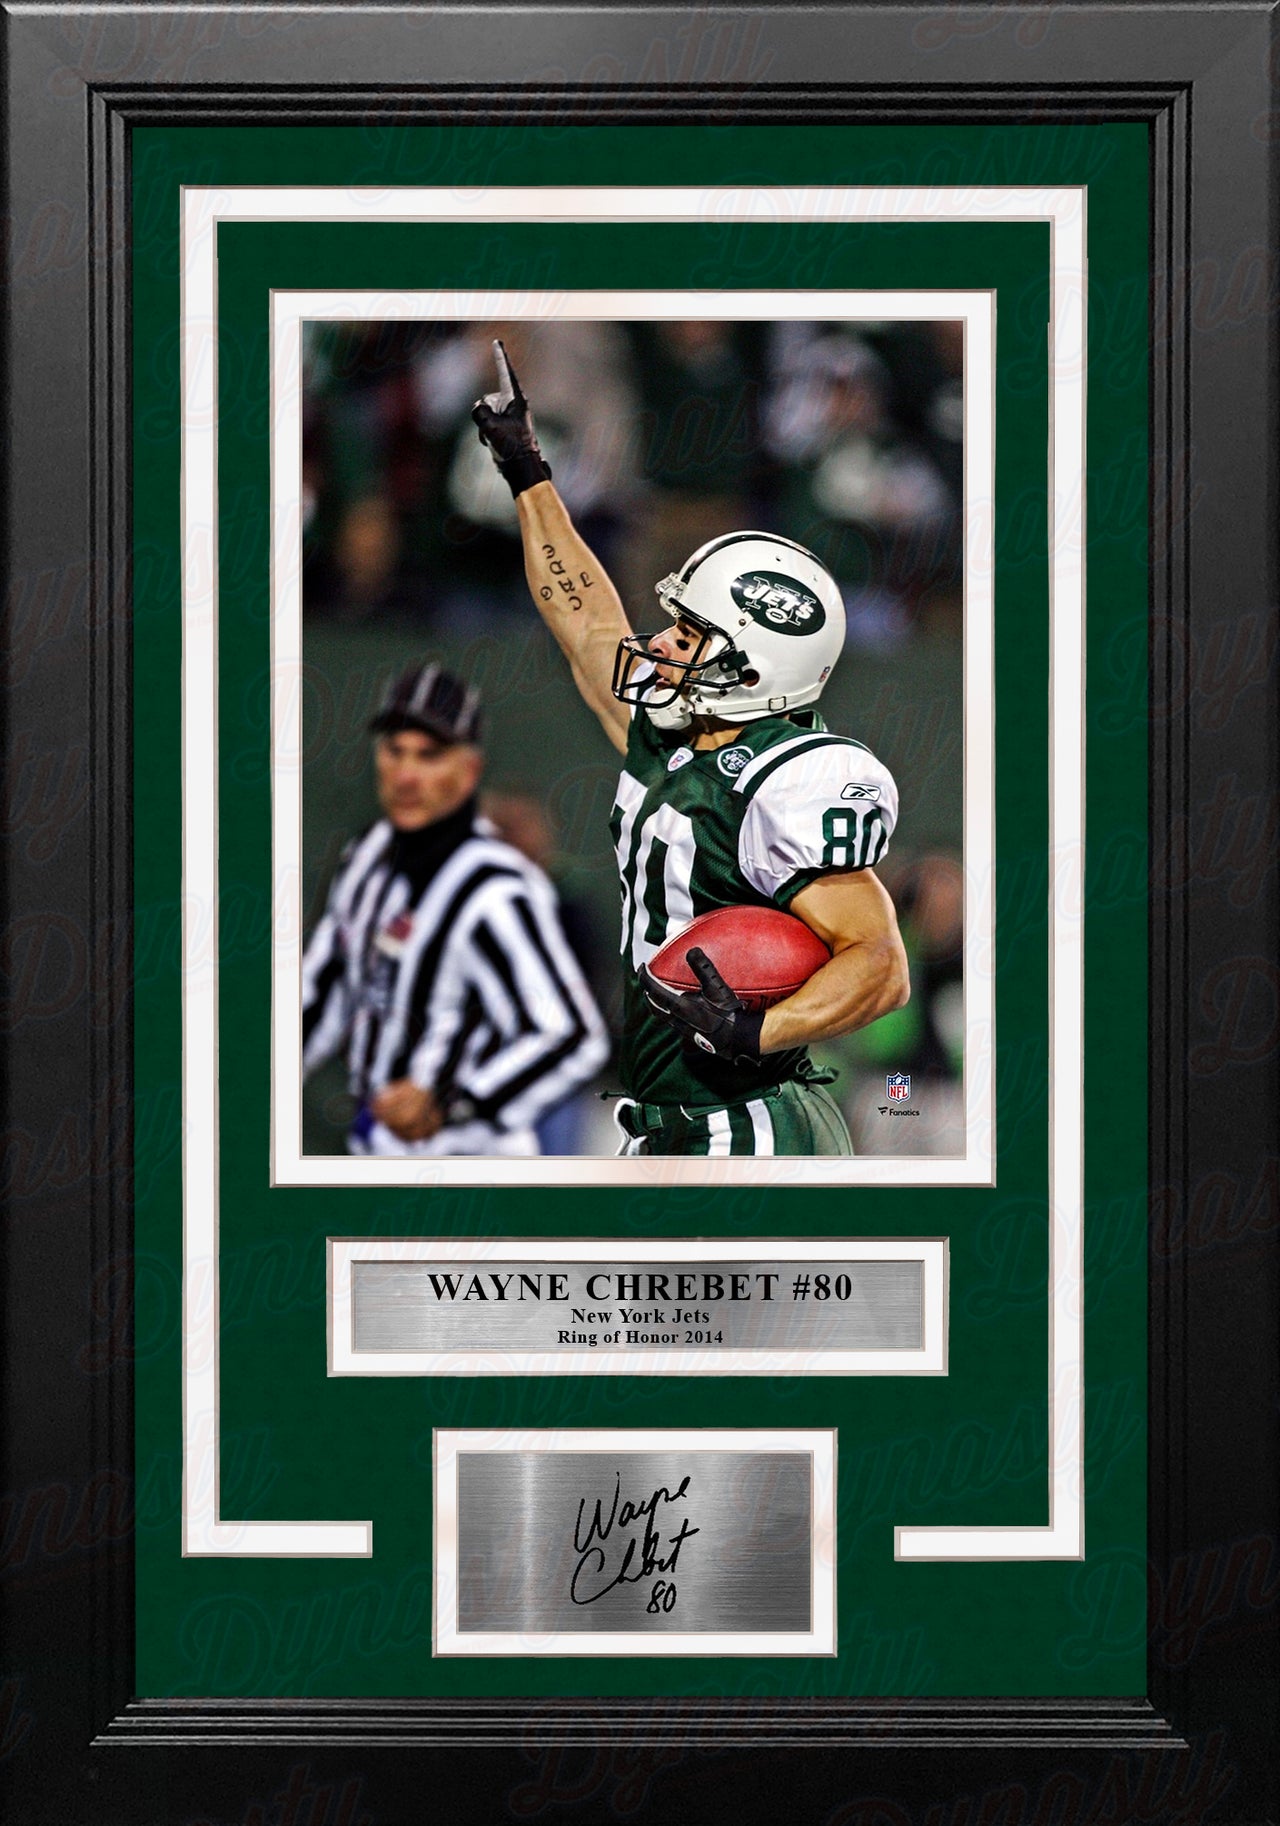 Wayne Chrebet Celebration New York Jets 8" x 10" Framed Football Photo with Engraved Autograph - Dynasty Sports & Framing 